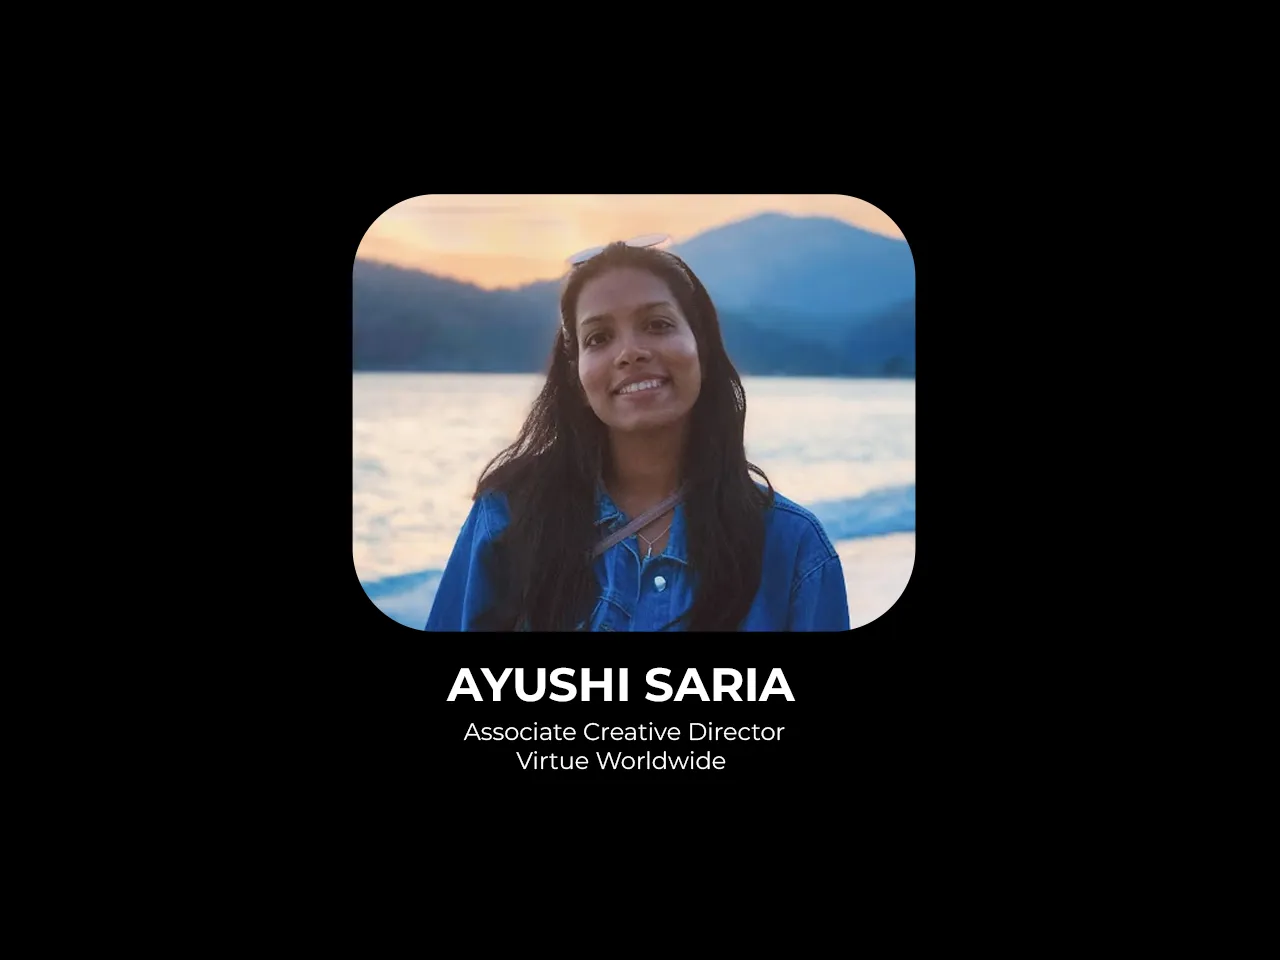 Virtue Worldwide appoints Ayushi Saria as Associate Creative Director